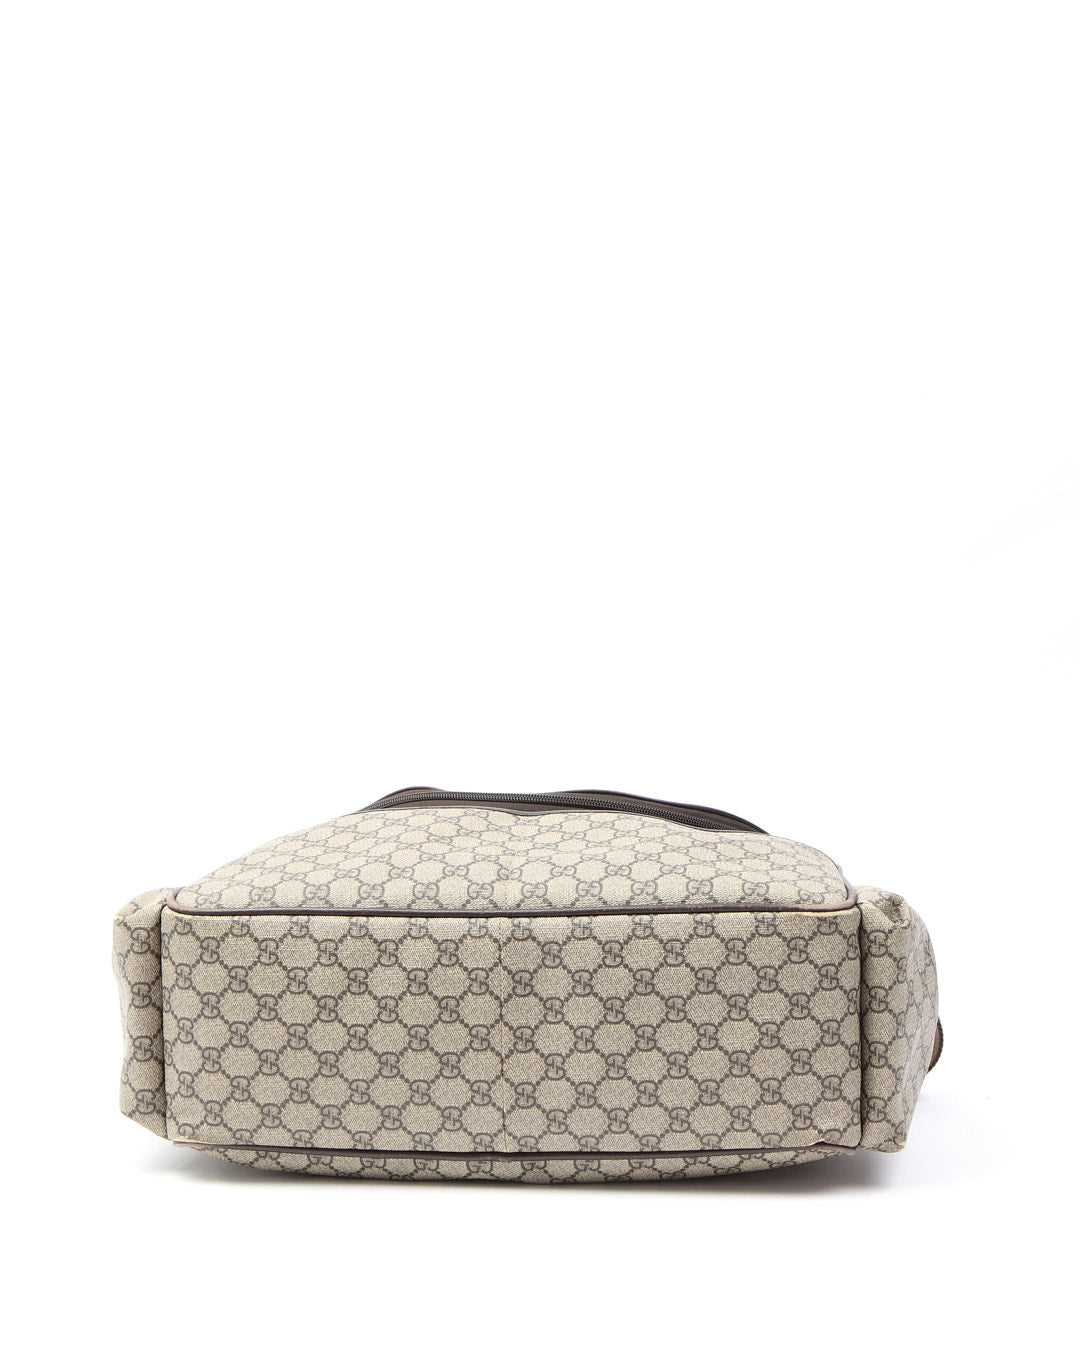 Gucci GG Supreme Coated Canvas Diaper Bag